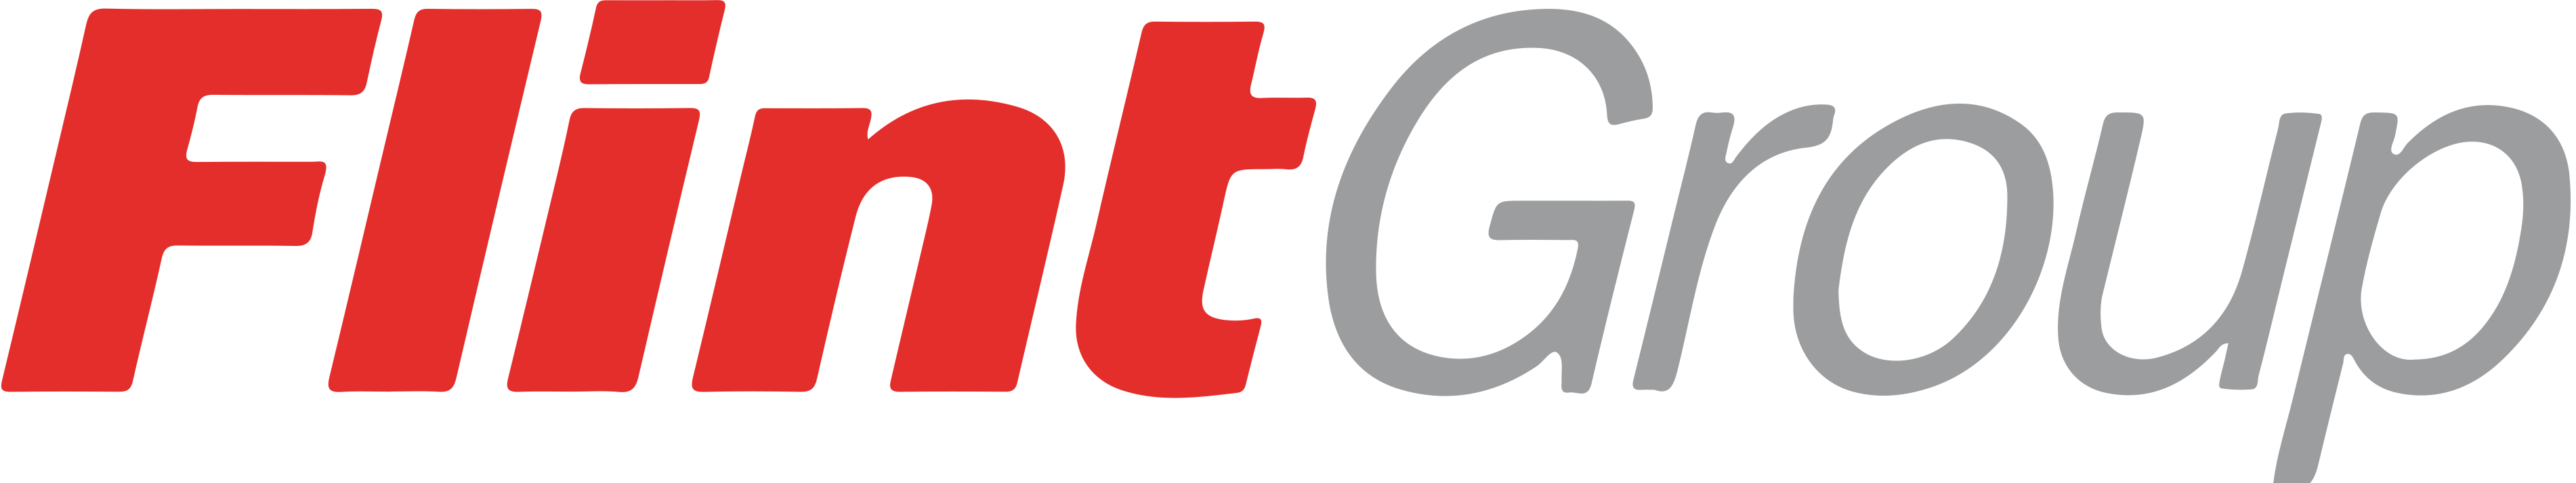 flintgroup_logo.png, 82kB